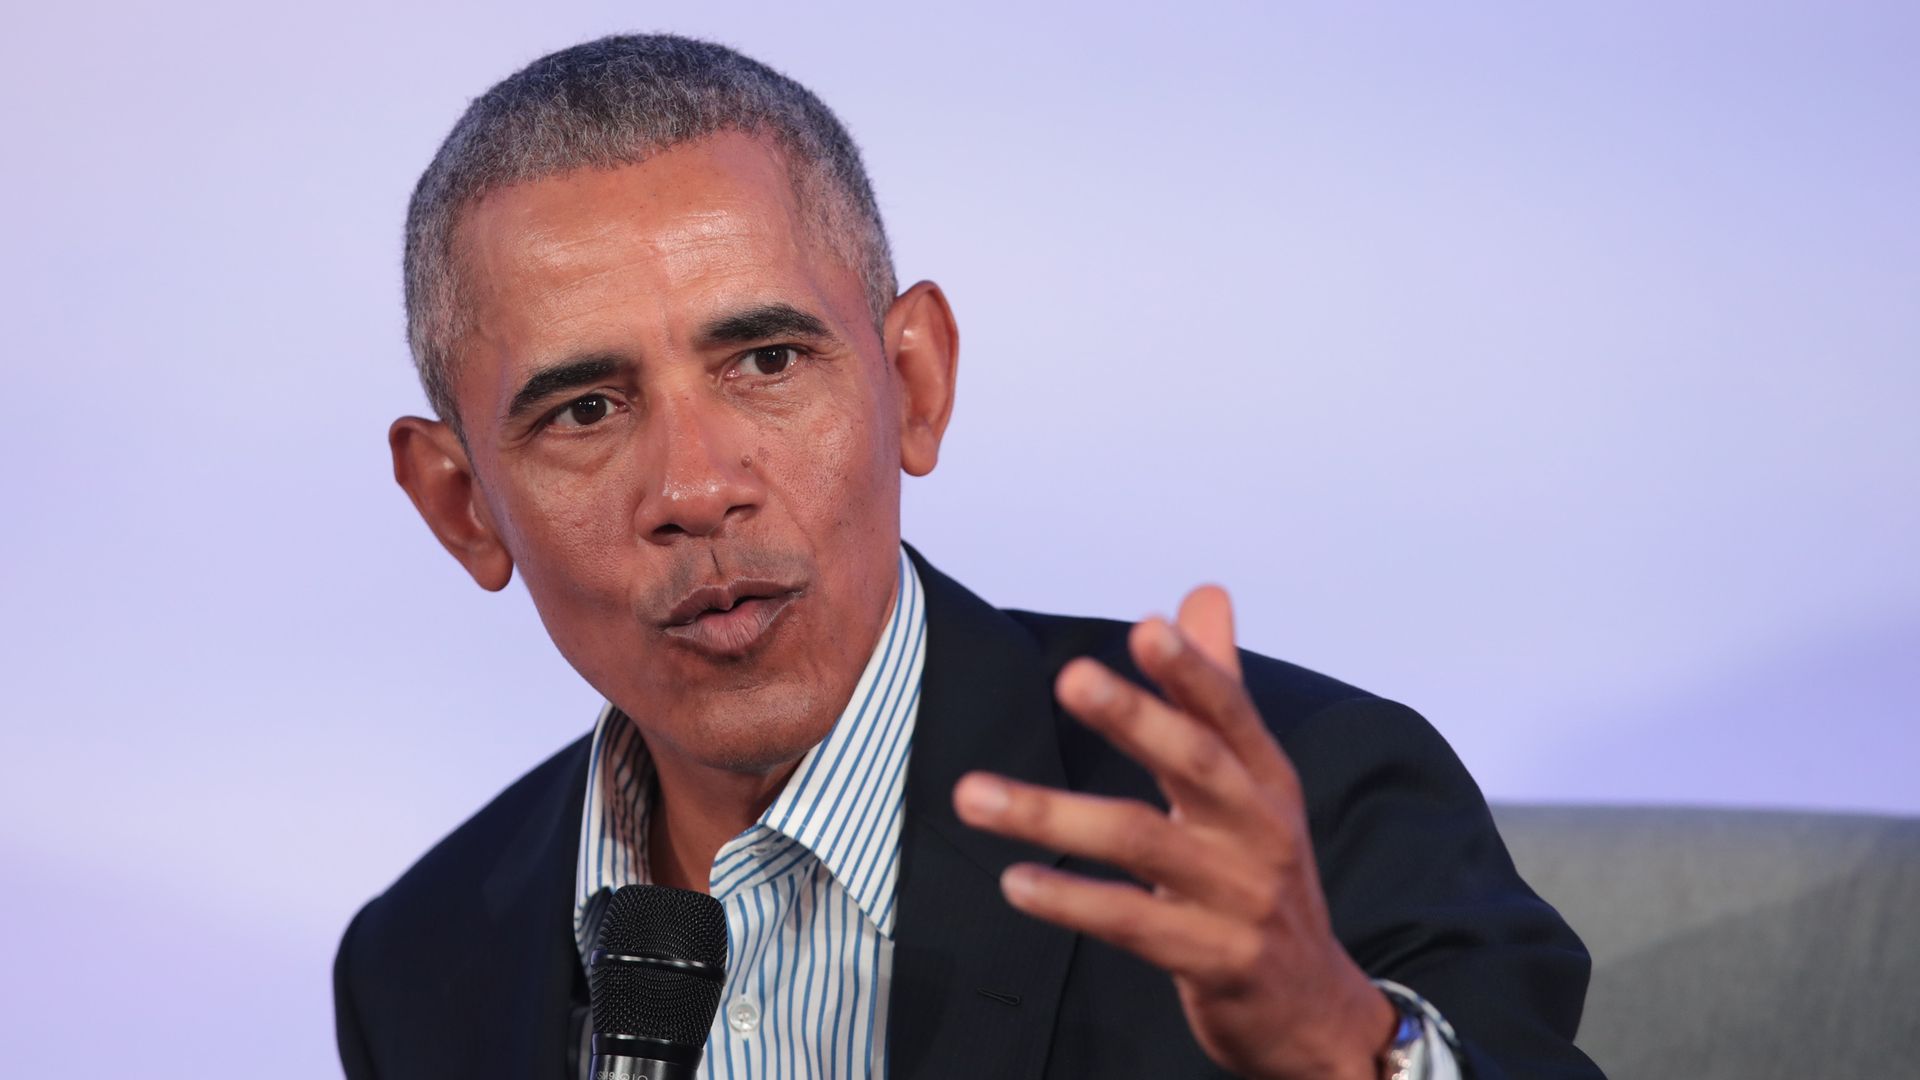 Barack Obama speaks at the Obama Foundation